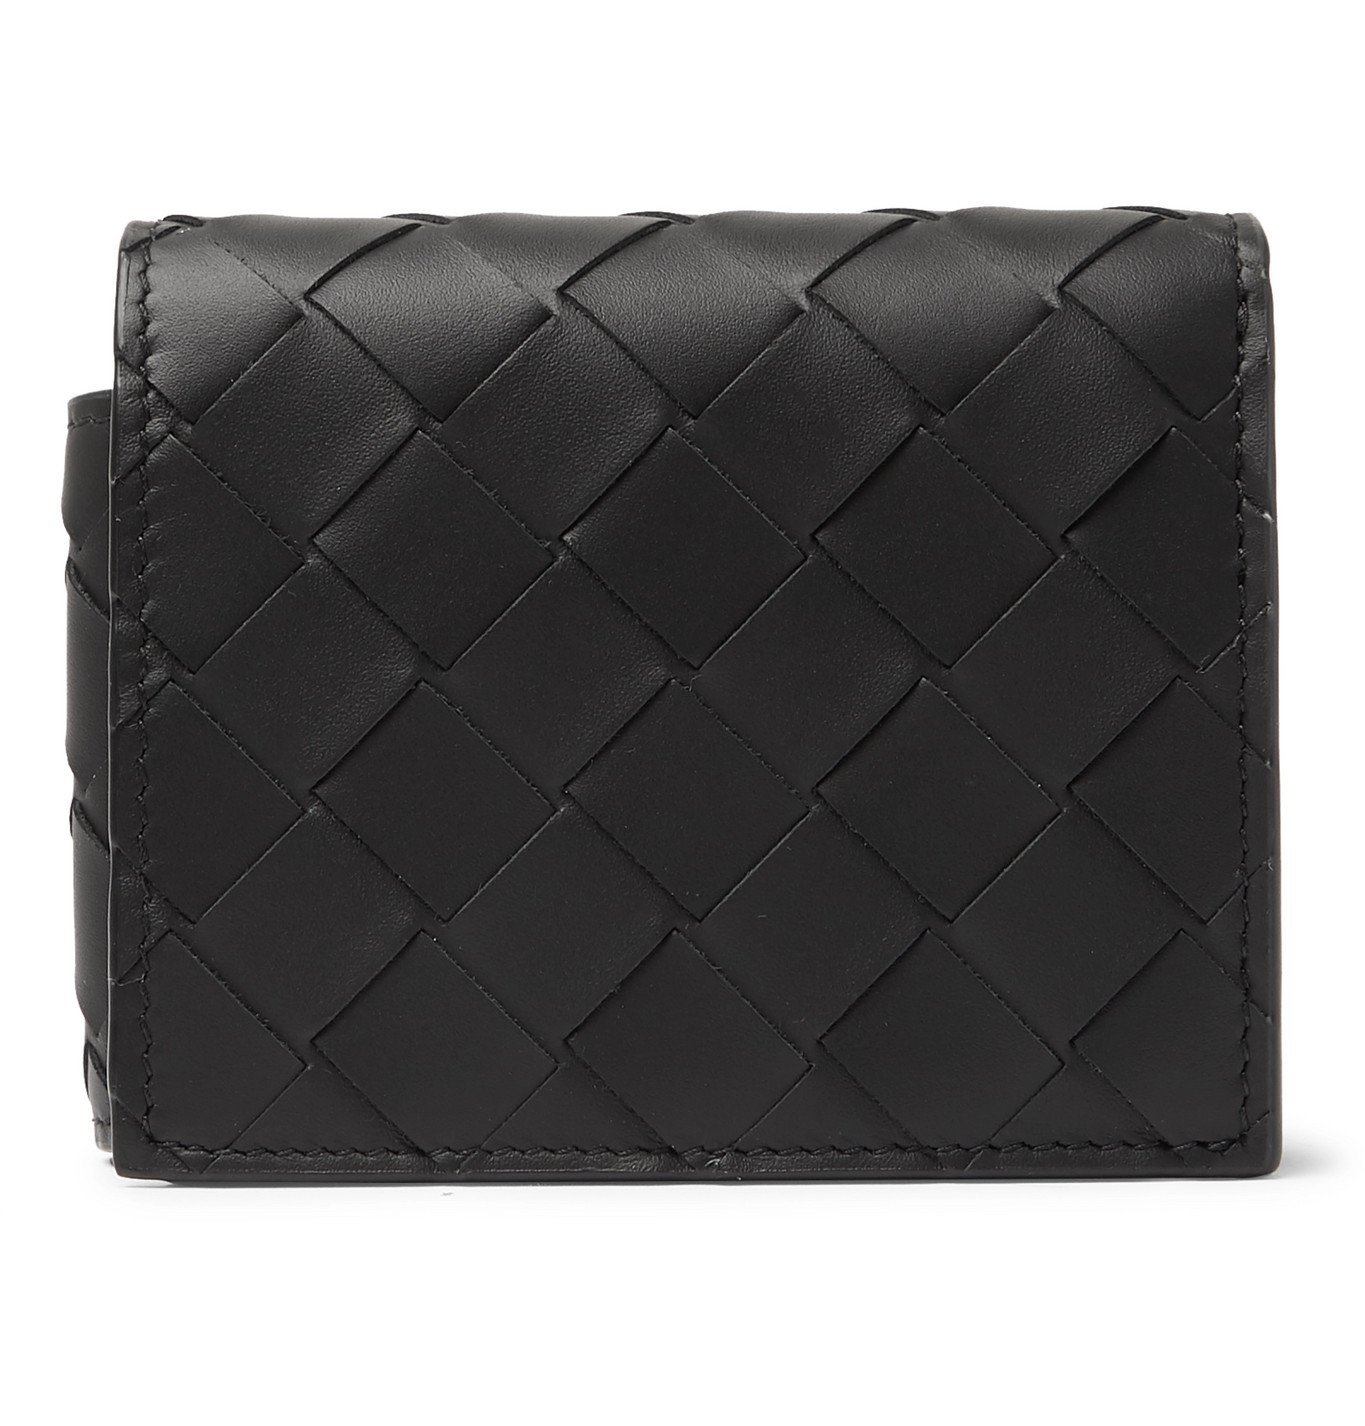 Bottega Veneta - Intrecciato Leather Trifold Wallet - Black Bottega Veneta